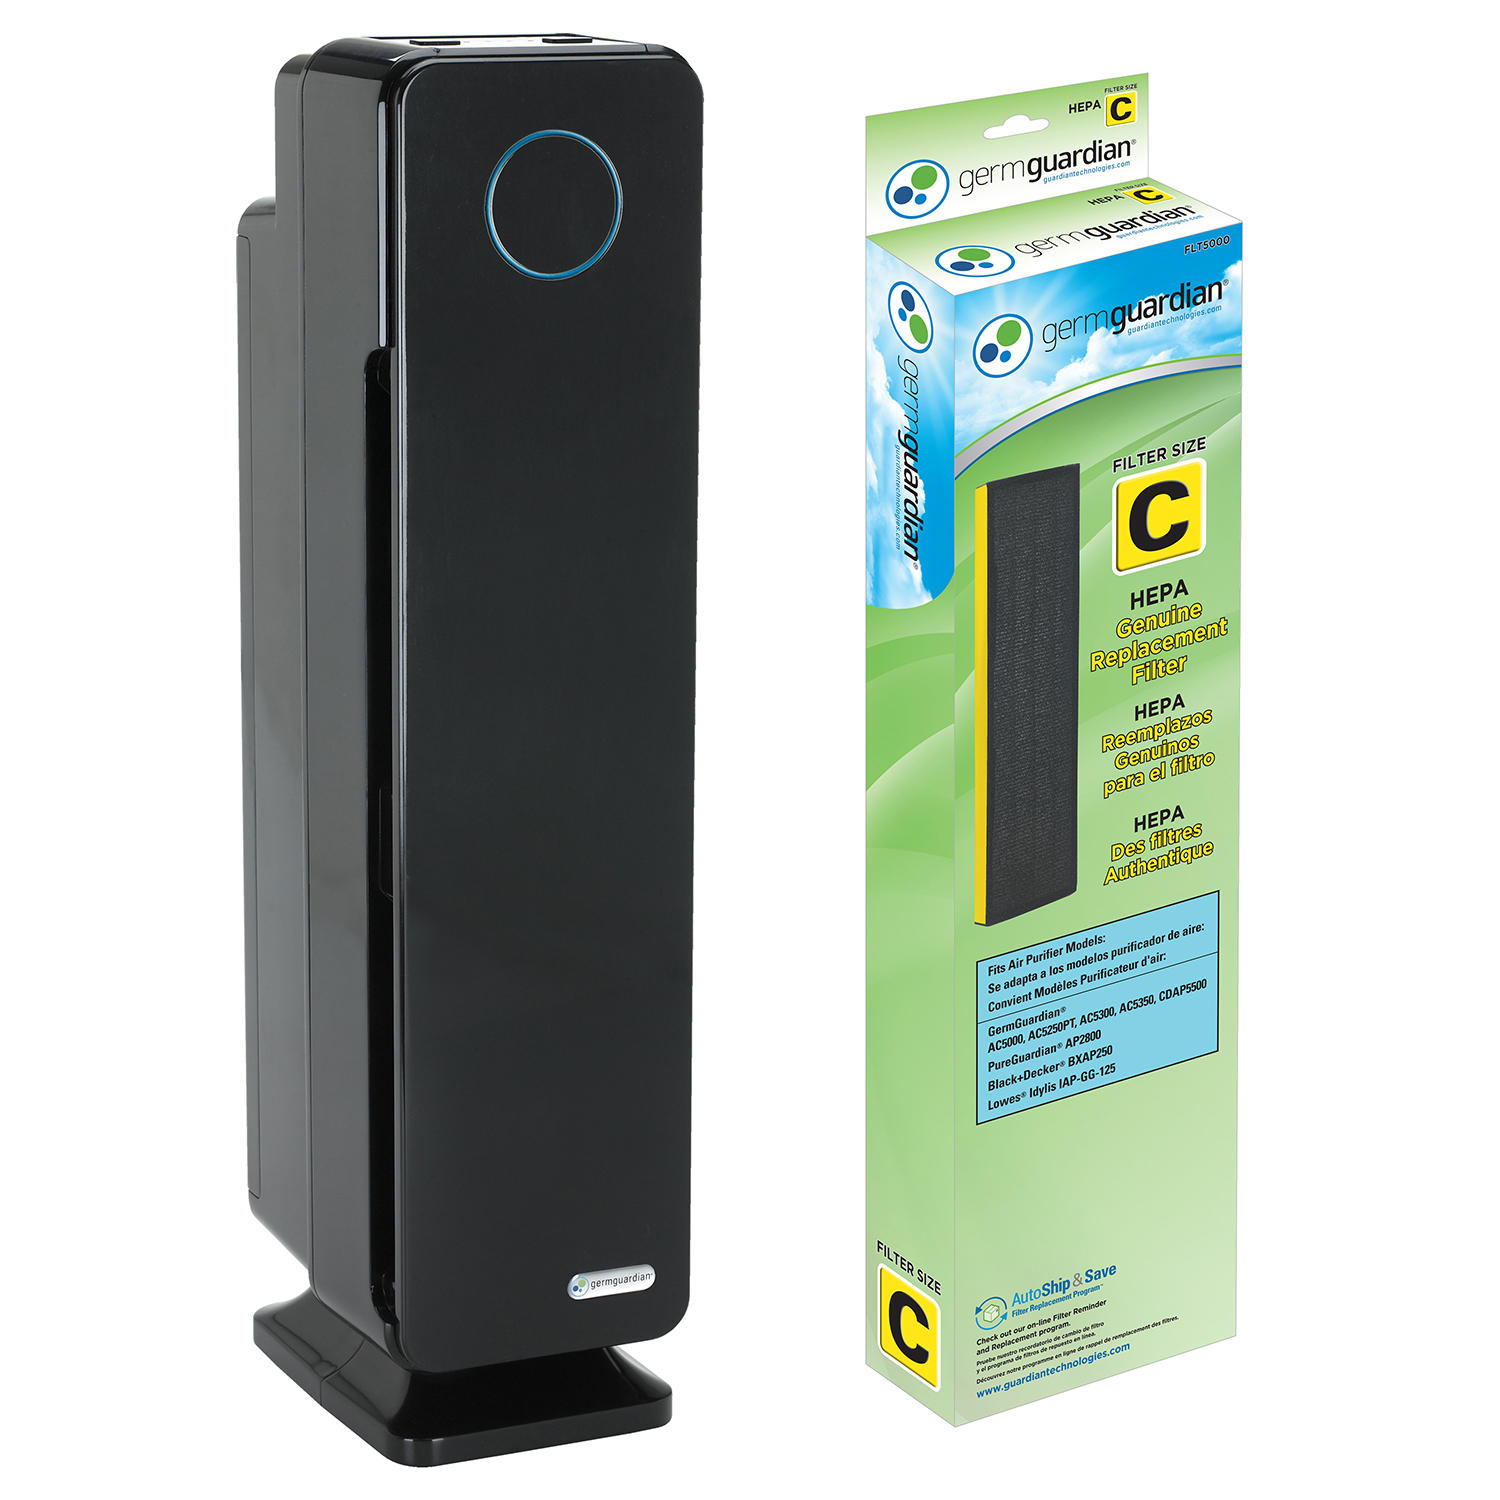 GermGuardian® AC5300B Elite 3-in-1 Air Purifier with HEPA Filter, Bonus HEPA Replacement Filter, UV Sanitizer and Odor